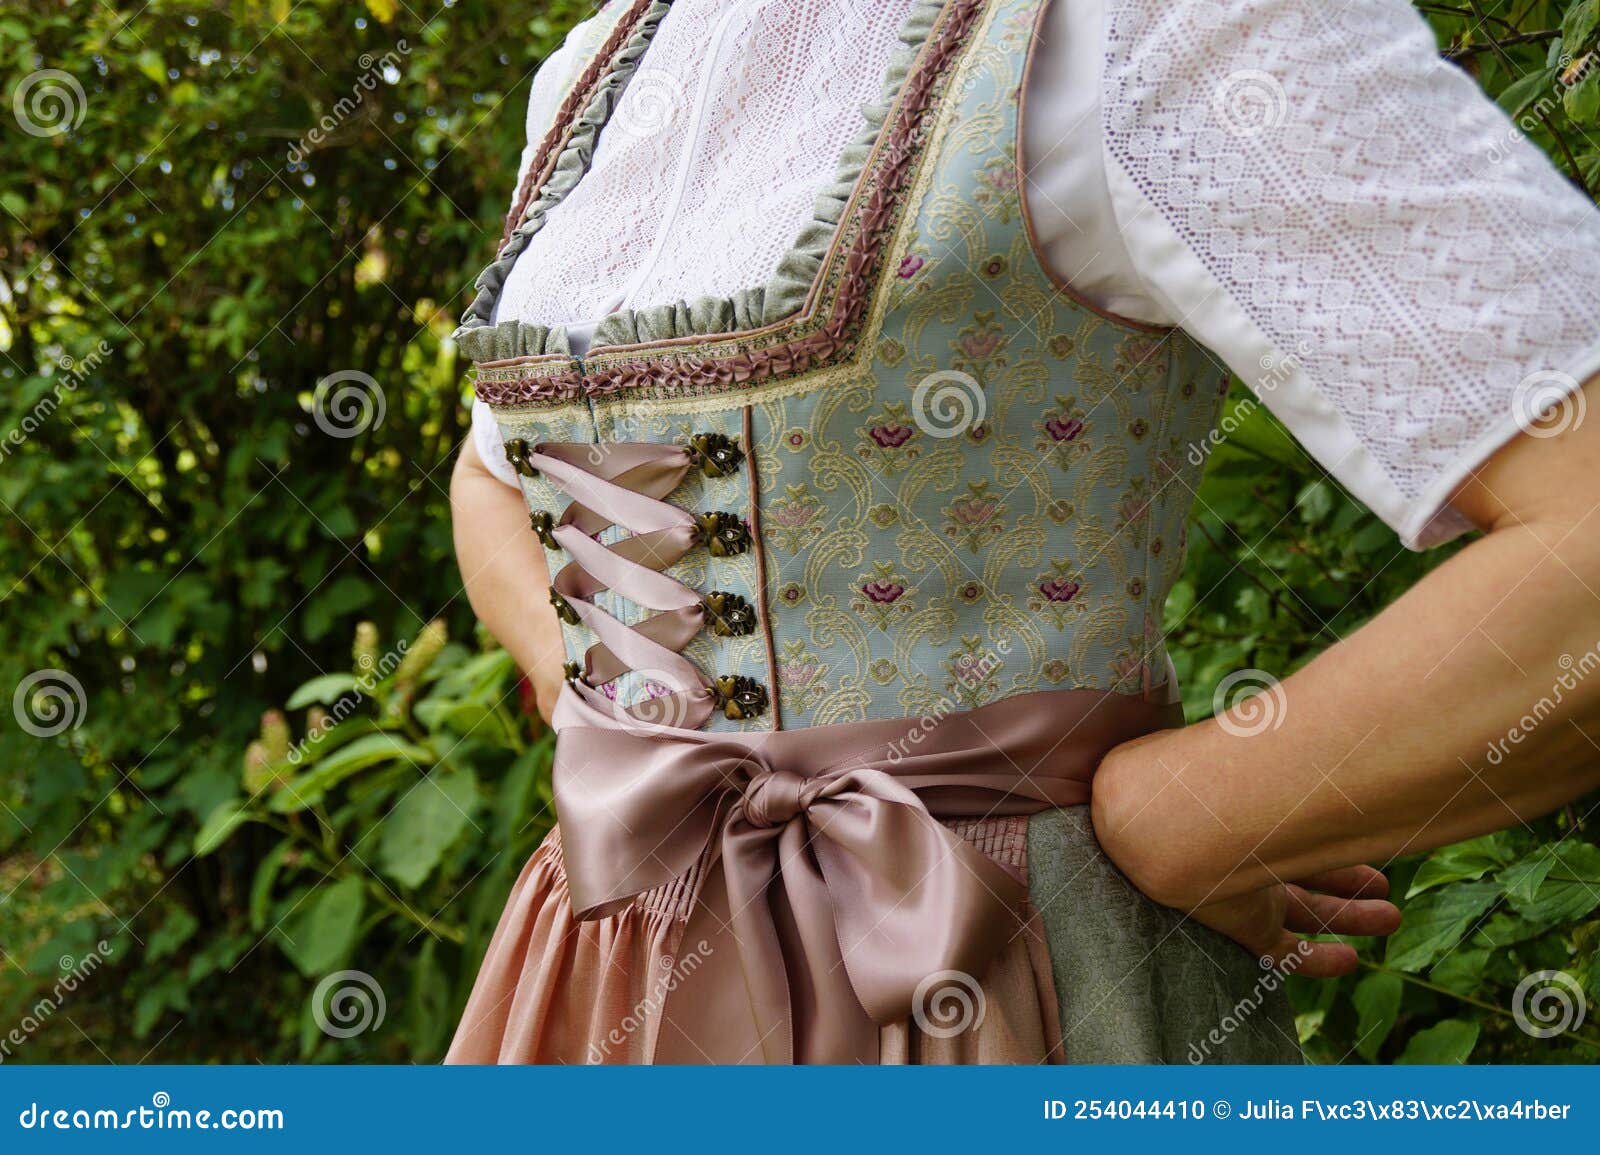 Vrouw in Mooie Traditionele Beierse of Oostenrijkse Kleding Tracht München Beieren Duitsland Stock Foto - of vesting, europa: 254044410